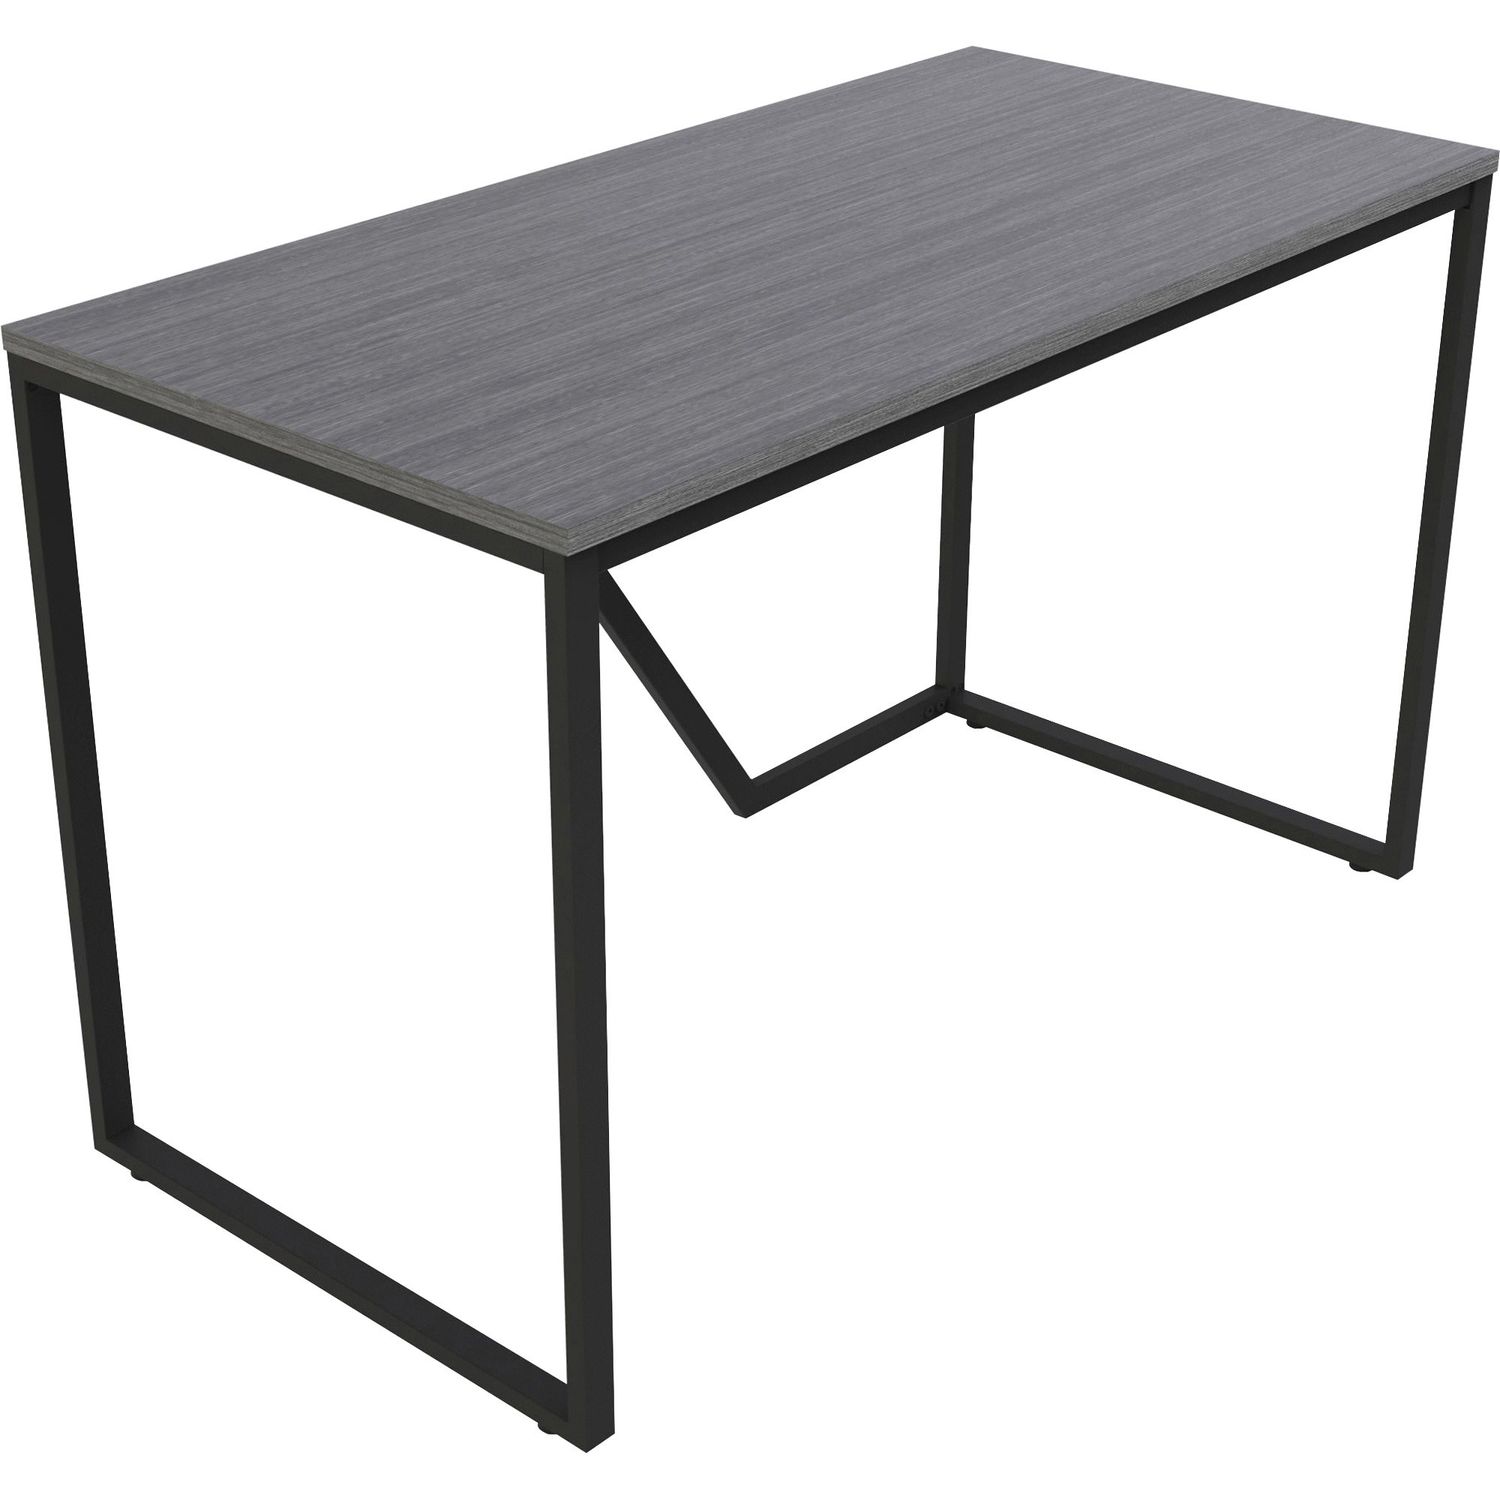 SOHO Modern Writing Desk 48" x 24" x 30", Material: Steel Frame, Laminate Top, Wood Top, Finish: Gray Top, Black